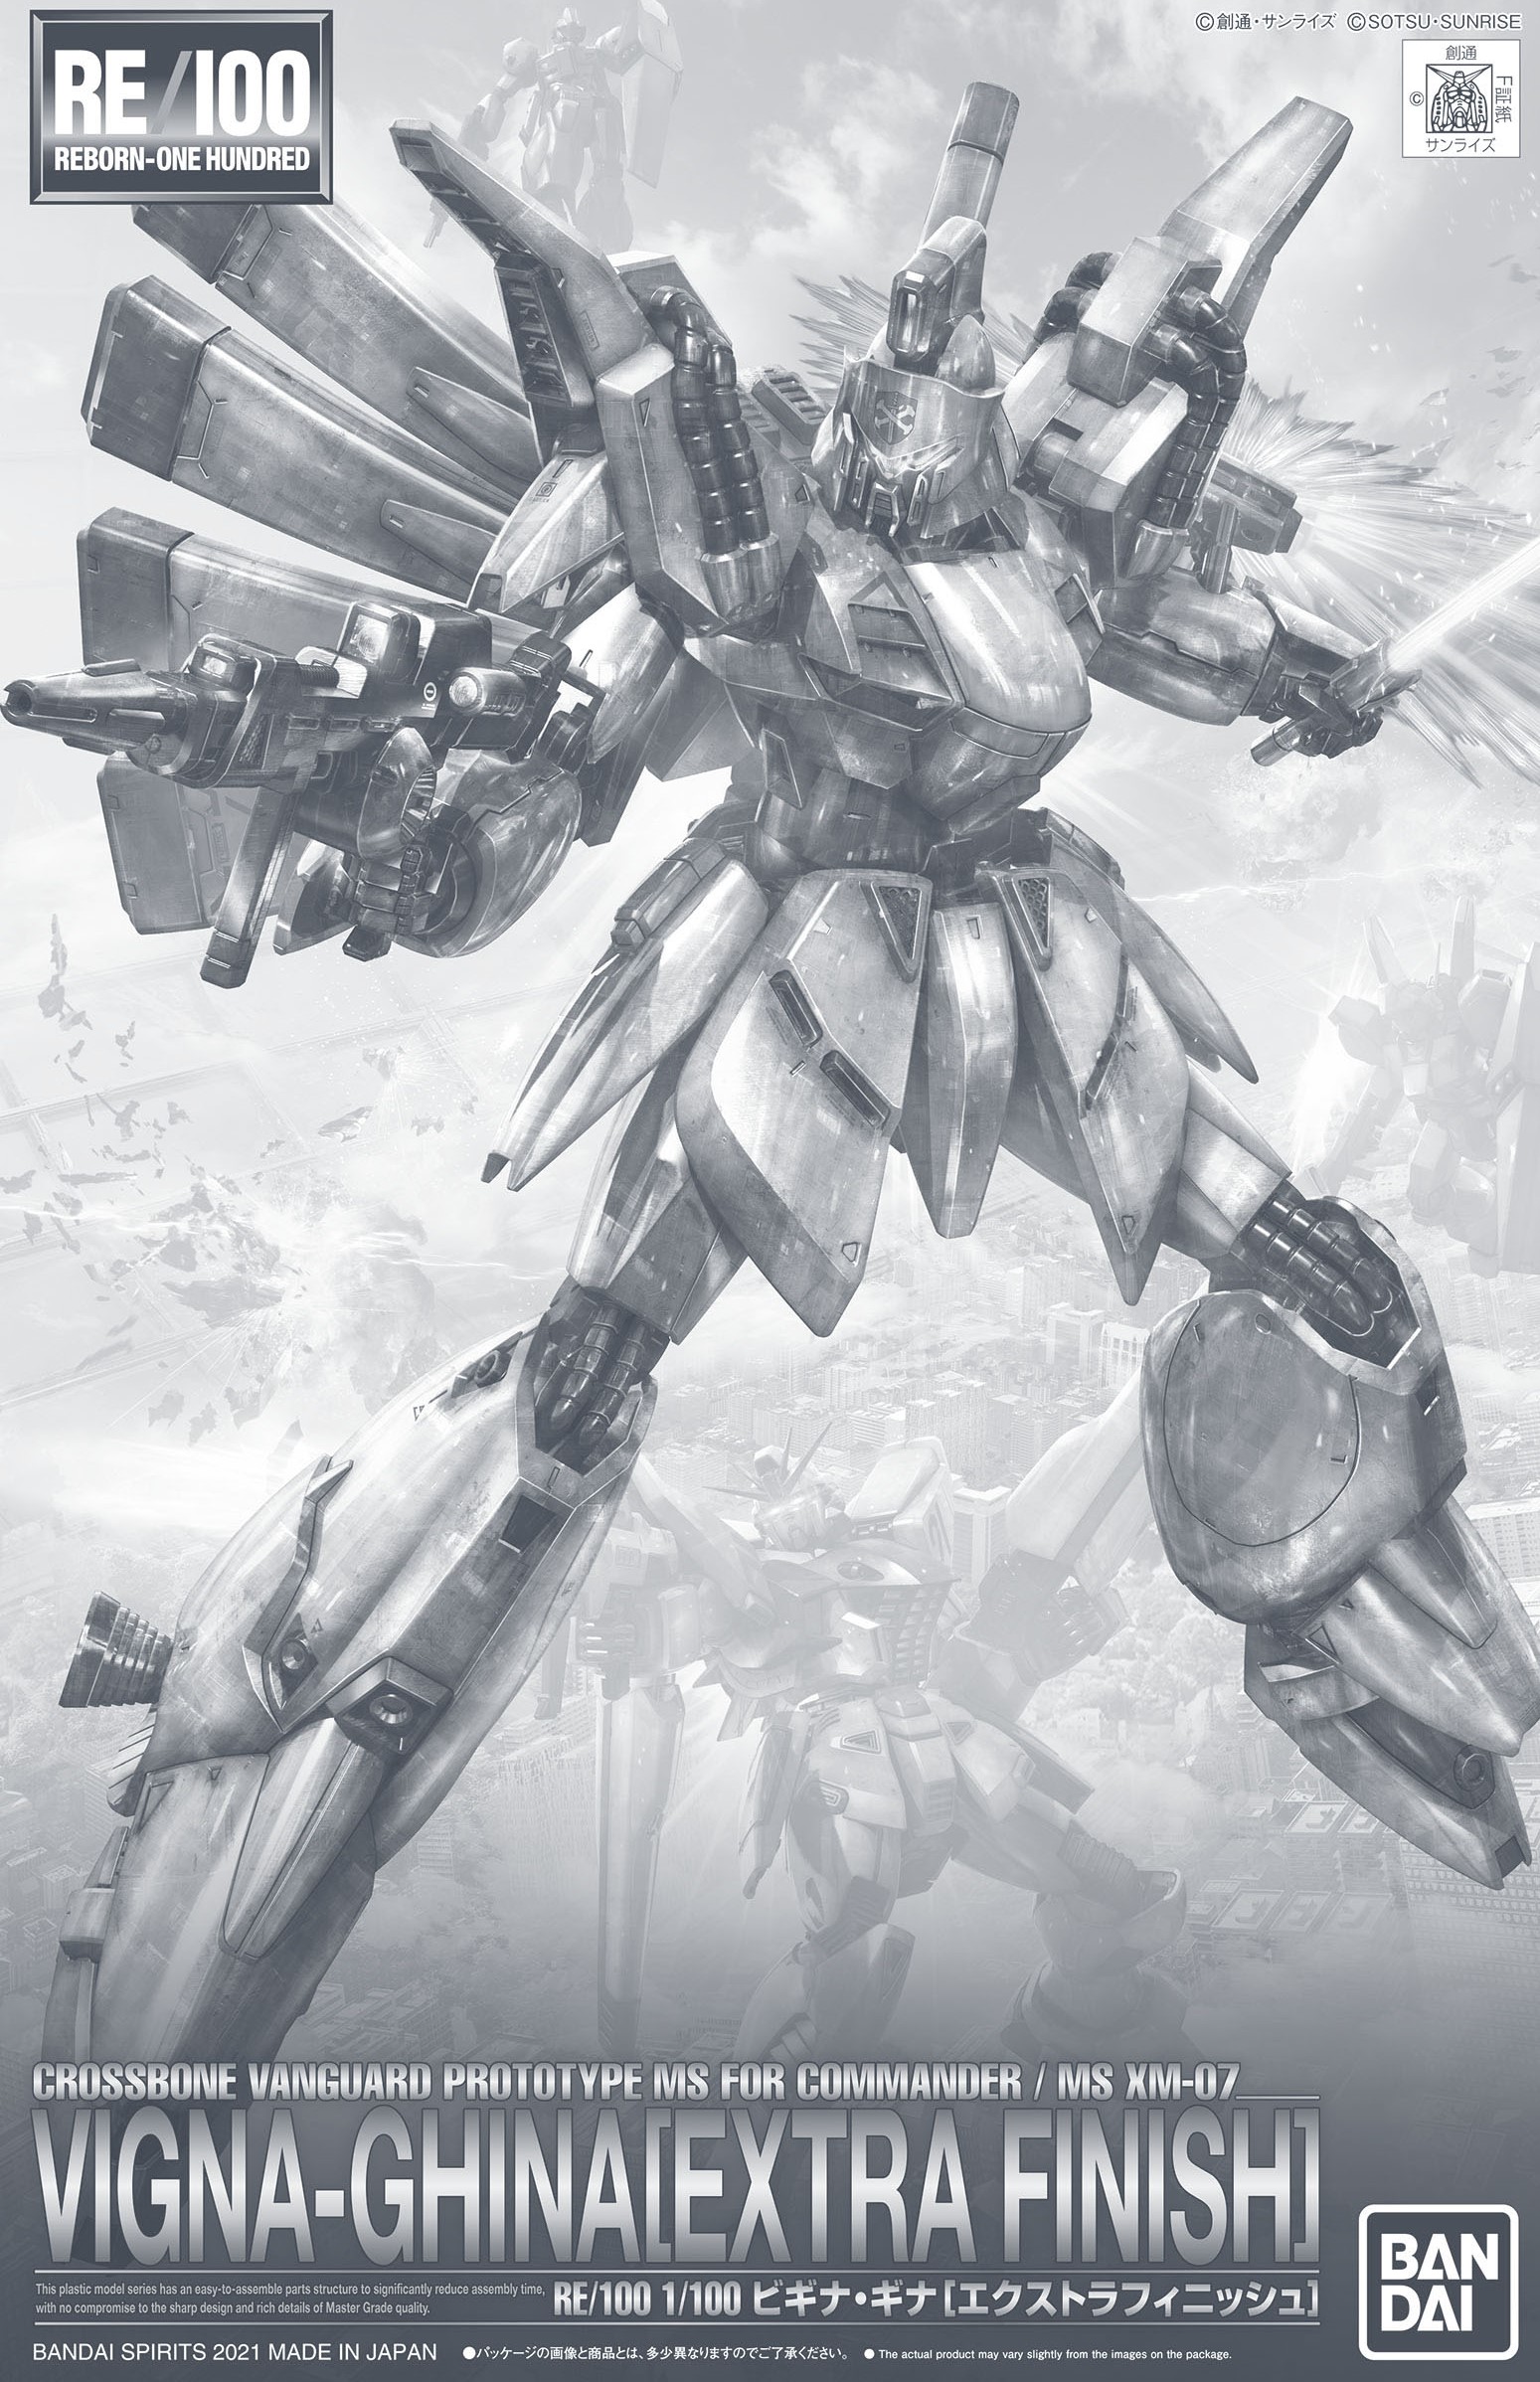 Reborn-One Hundred, The Gundam Wiki